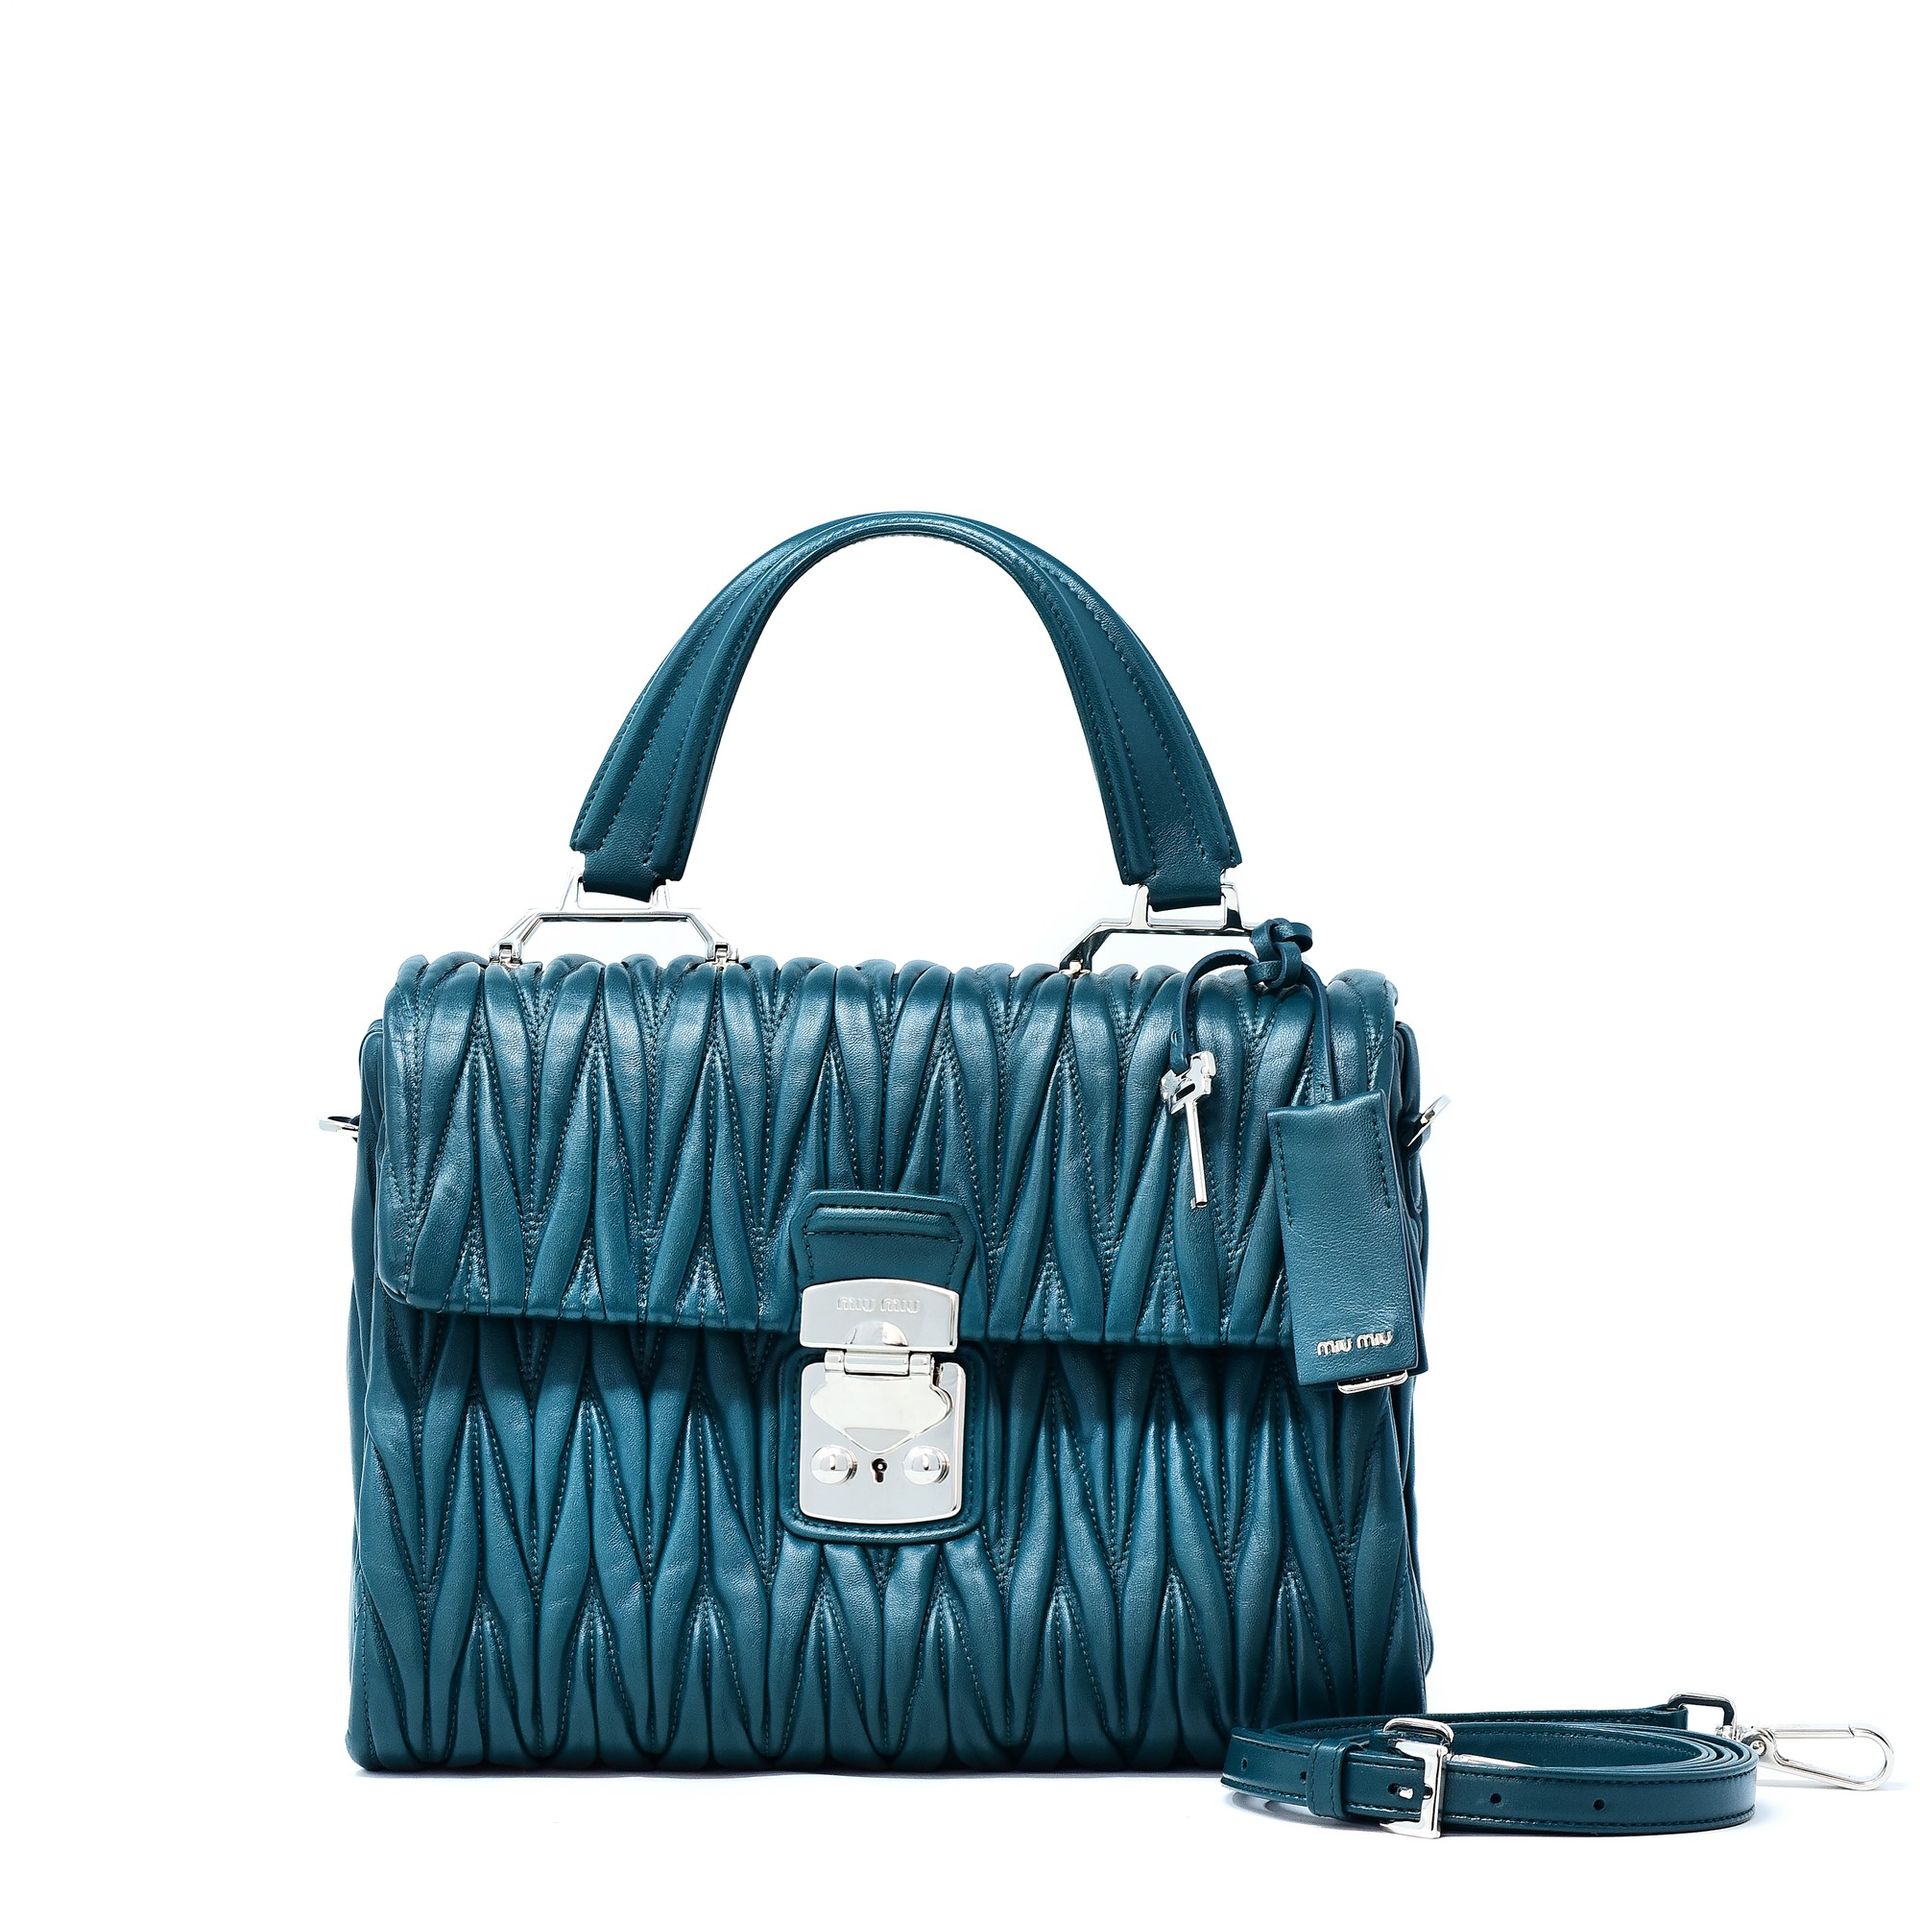 MIU MIU Miu Miu Confindential handbag in petrol-colored matelassé calfskin with &hellip;